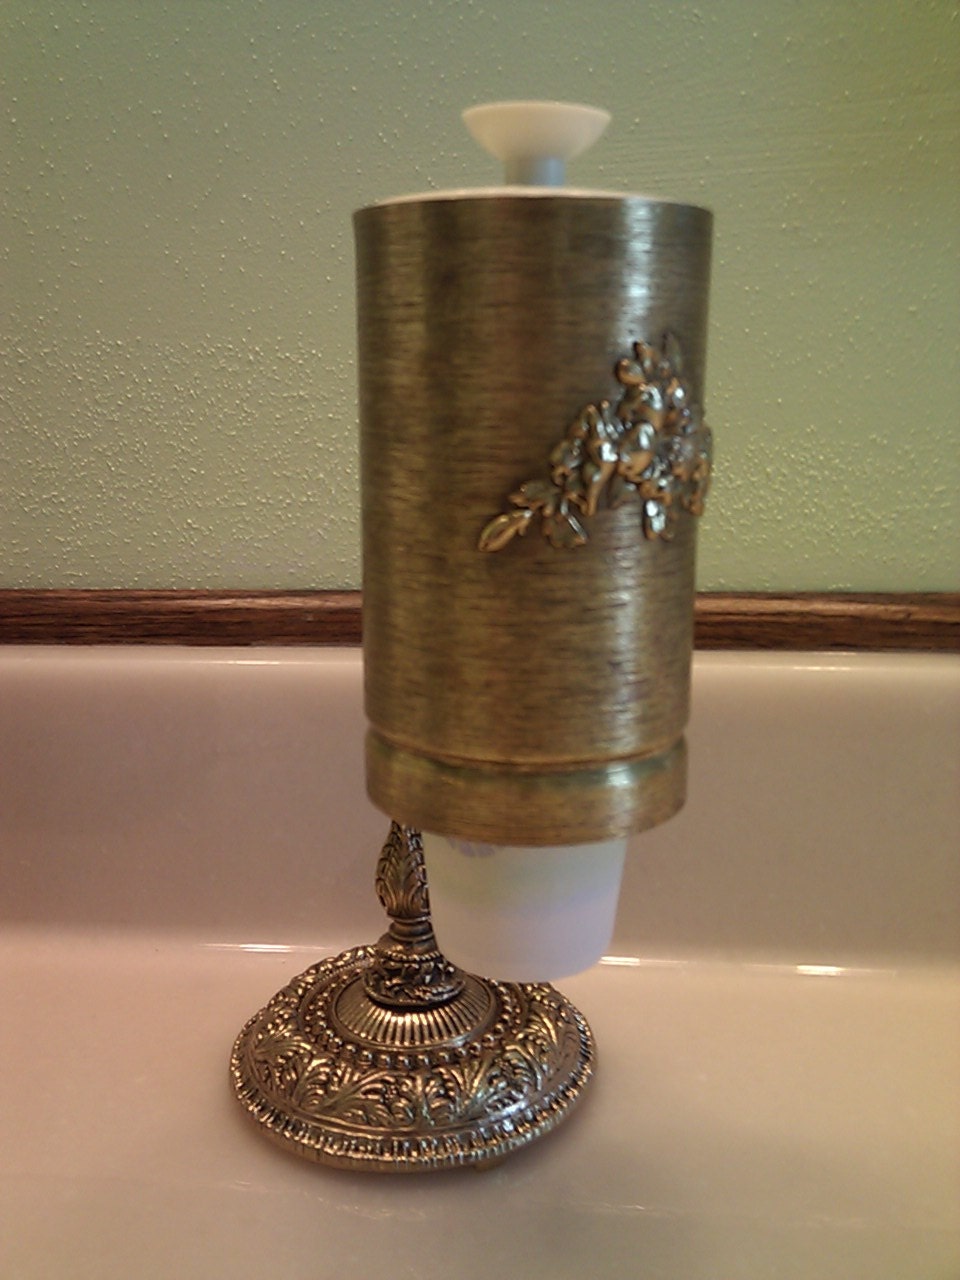 Holder dixie Dixie  Vintage JuneyWCleaver cup Gold by Cup Dispenser Bathroom vintage dispenser